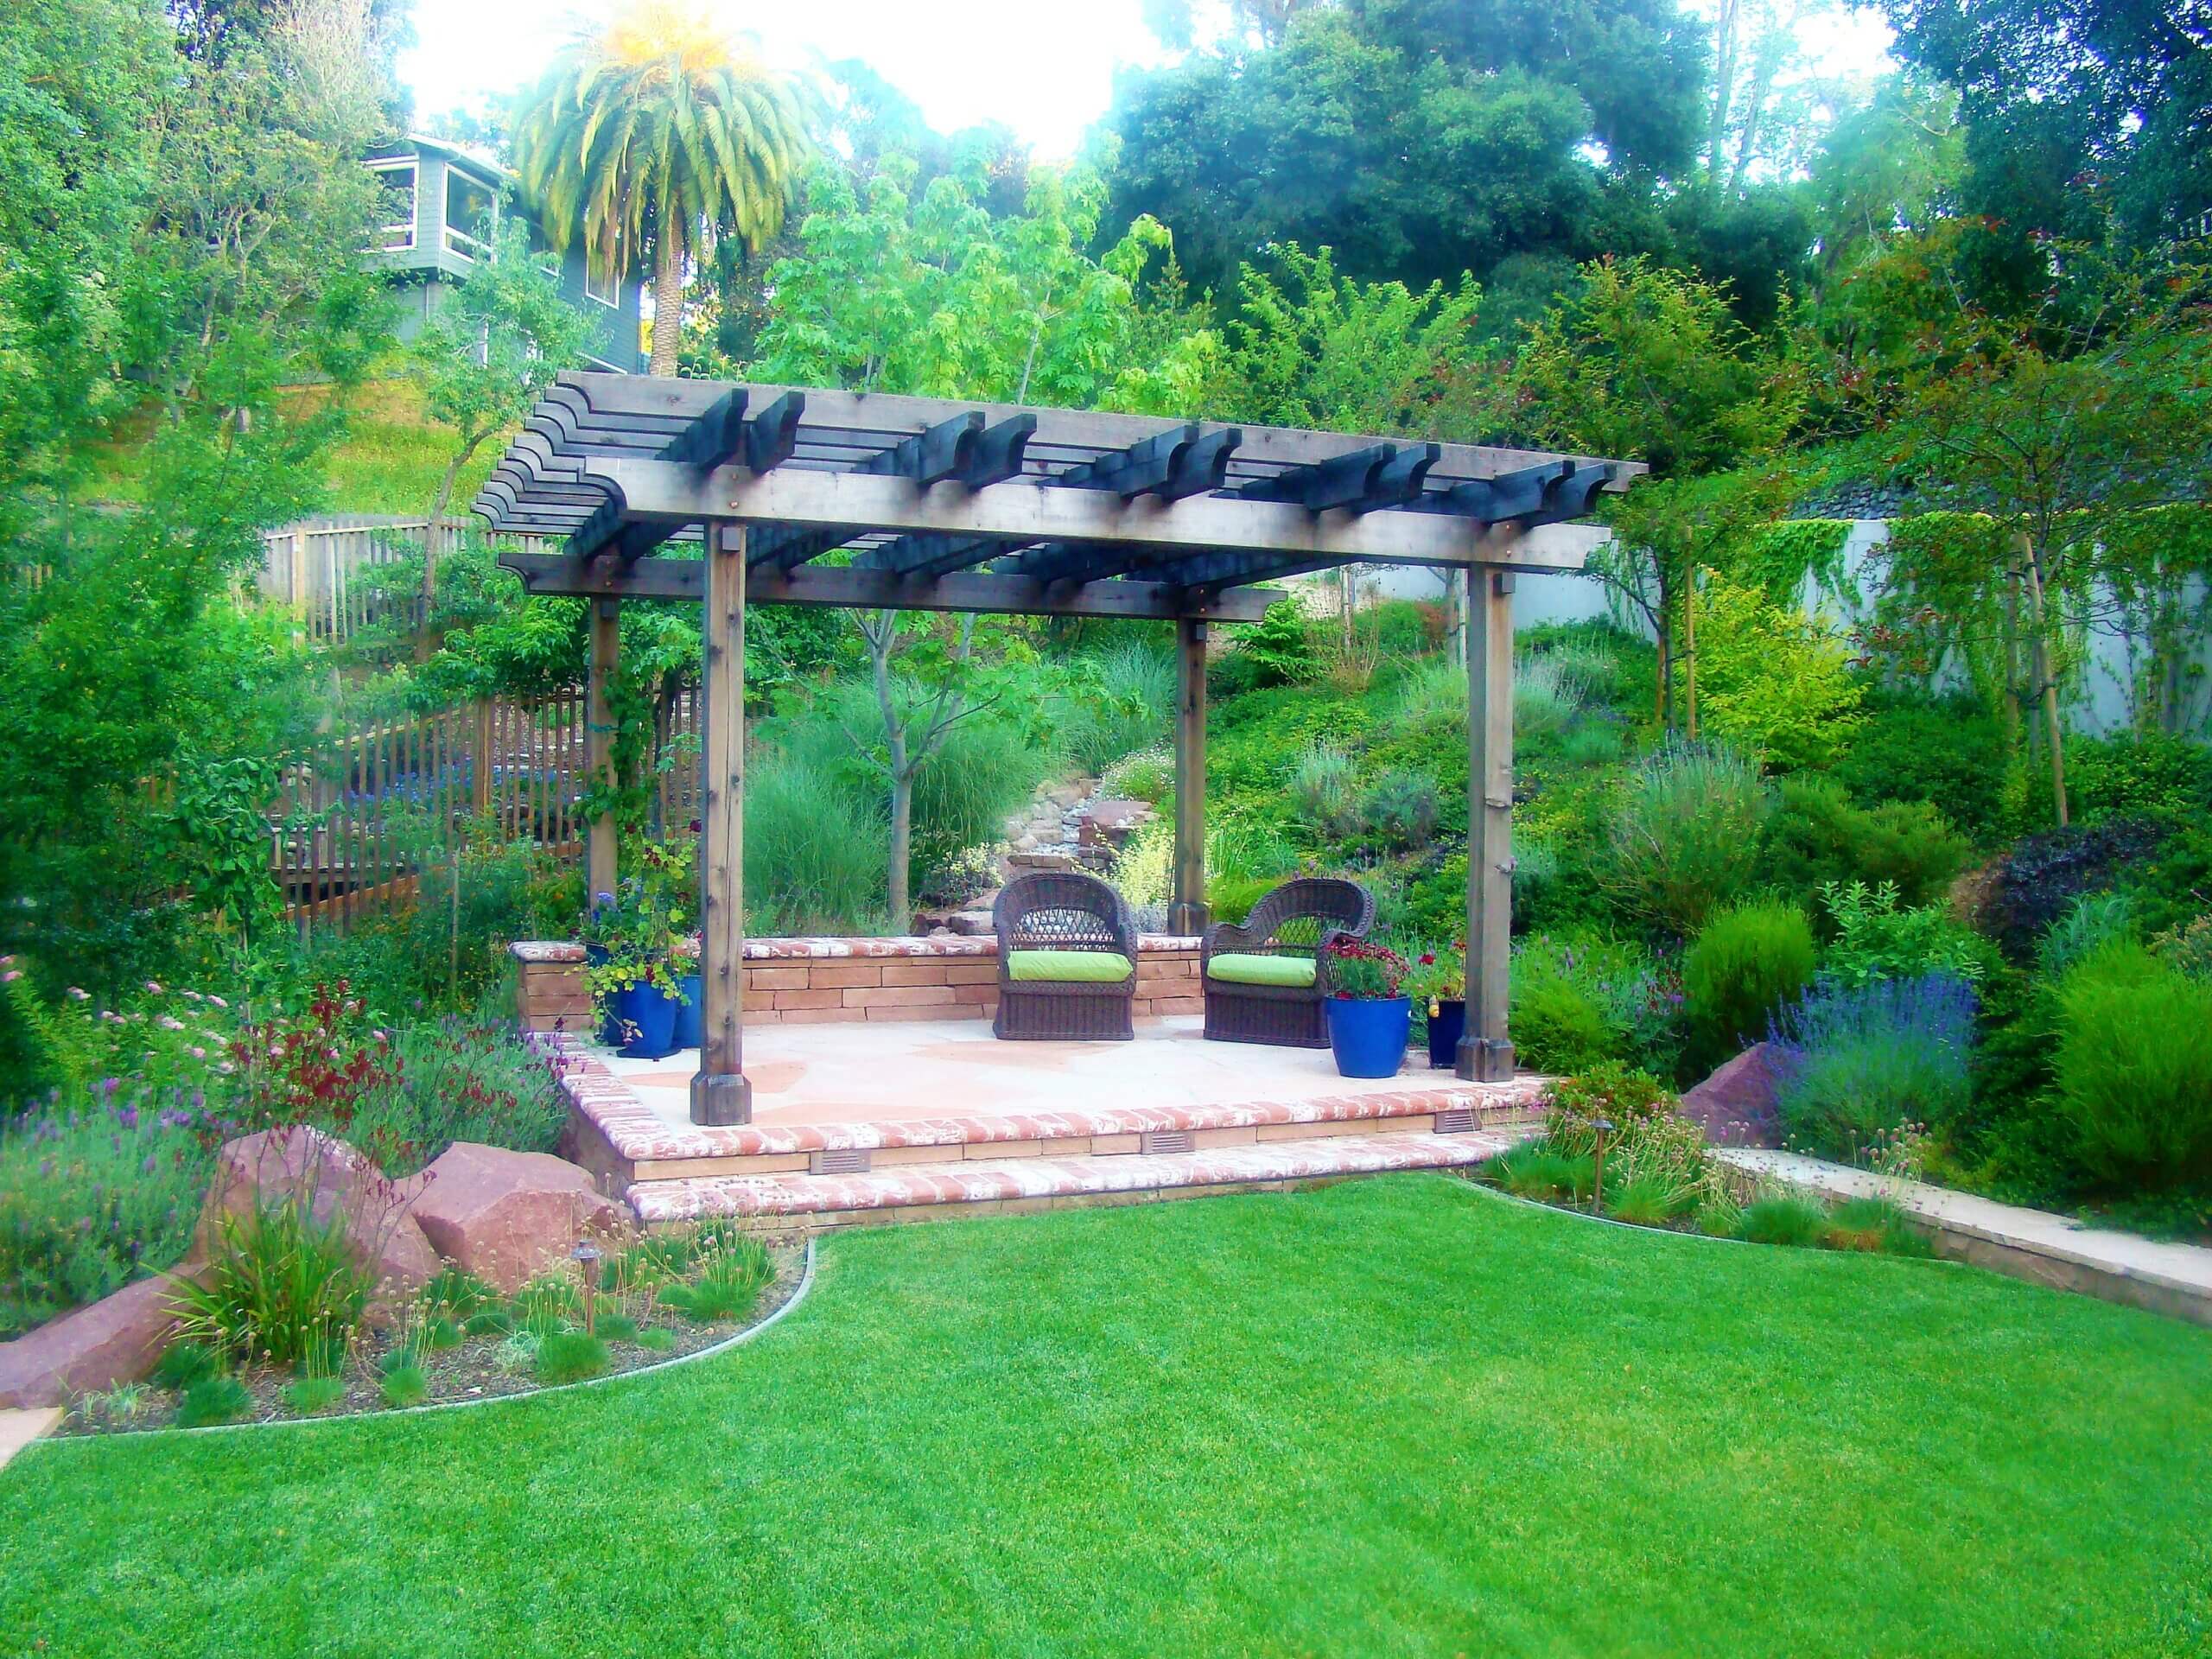 Pergola built over brick raised patio with planter pots and garden seating in a lush green California backyard environment